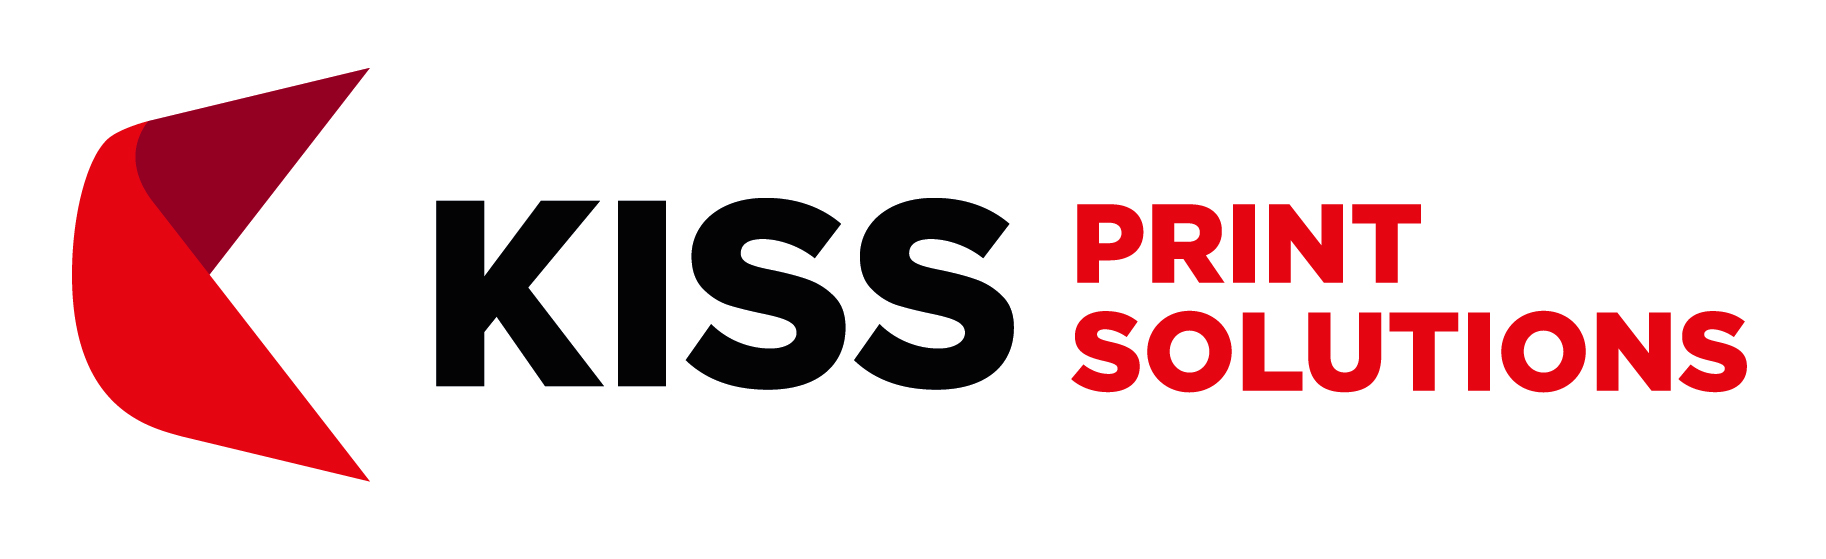 KISS Print Solutions